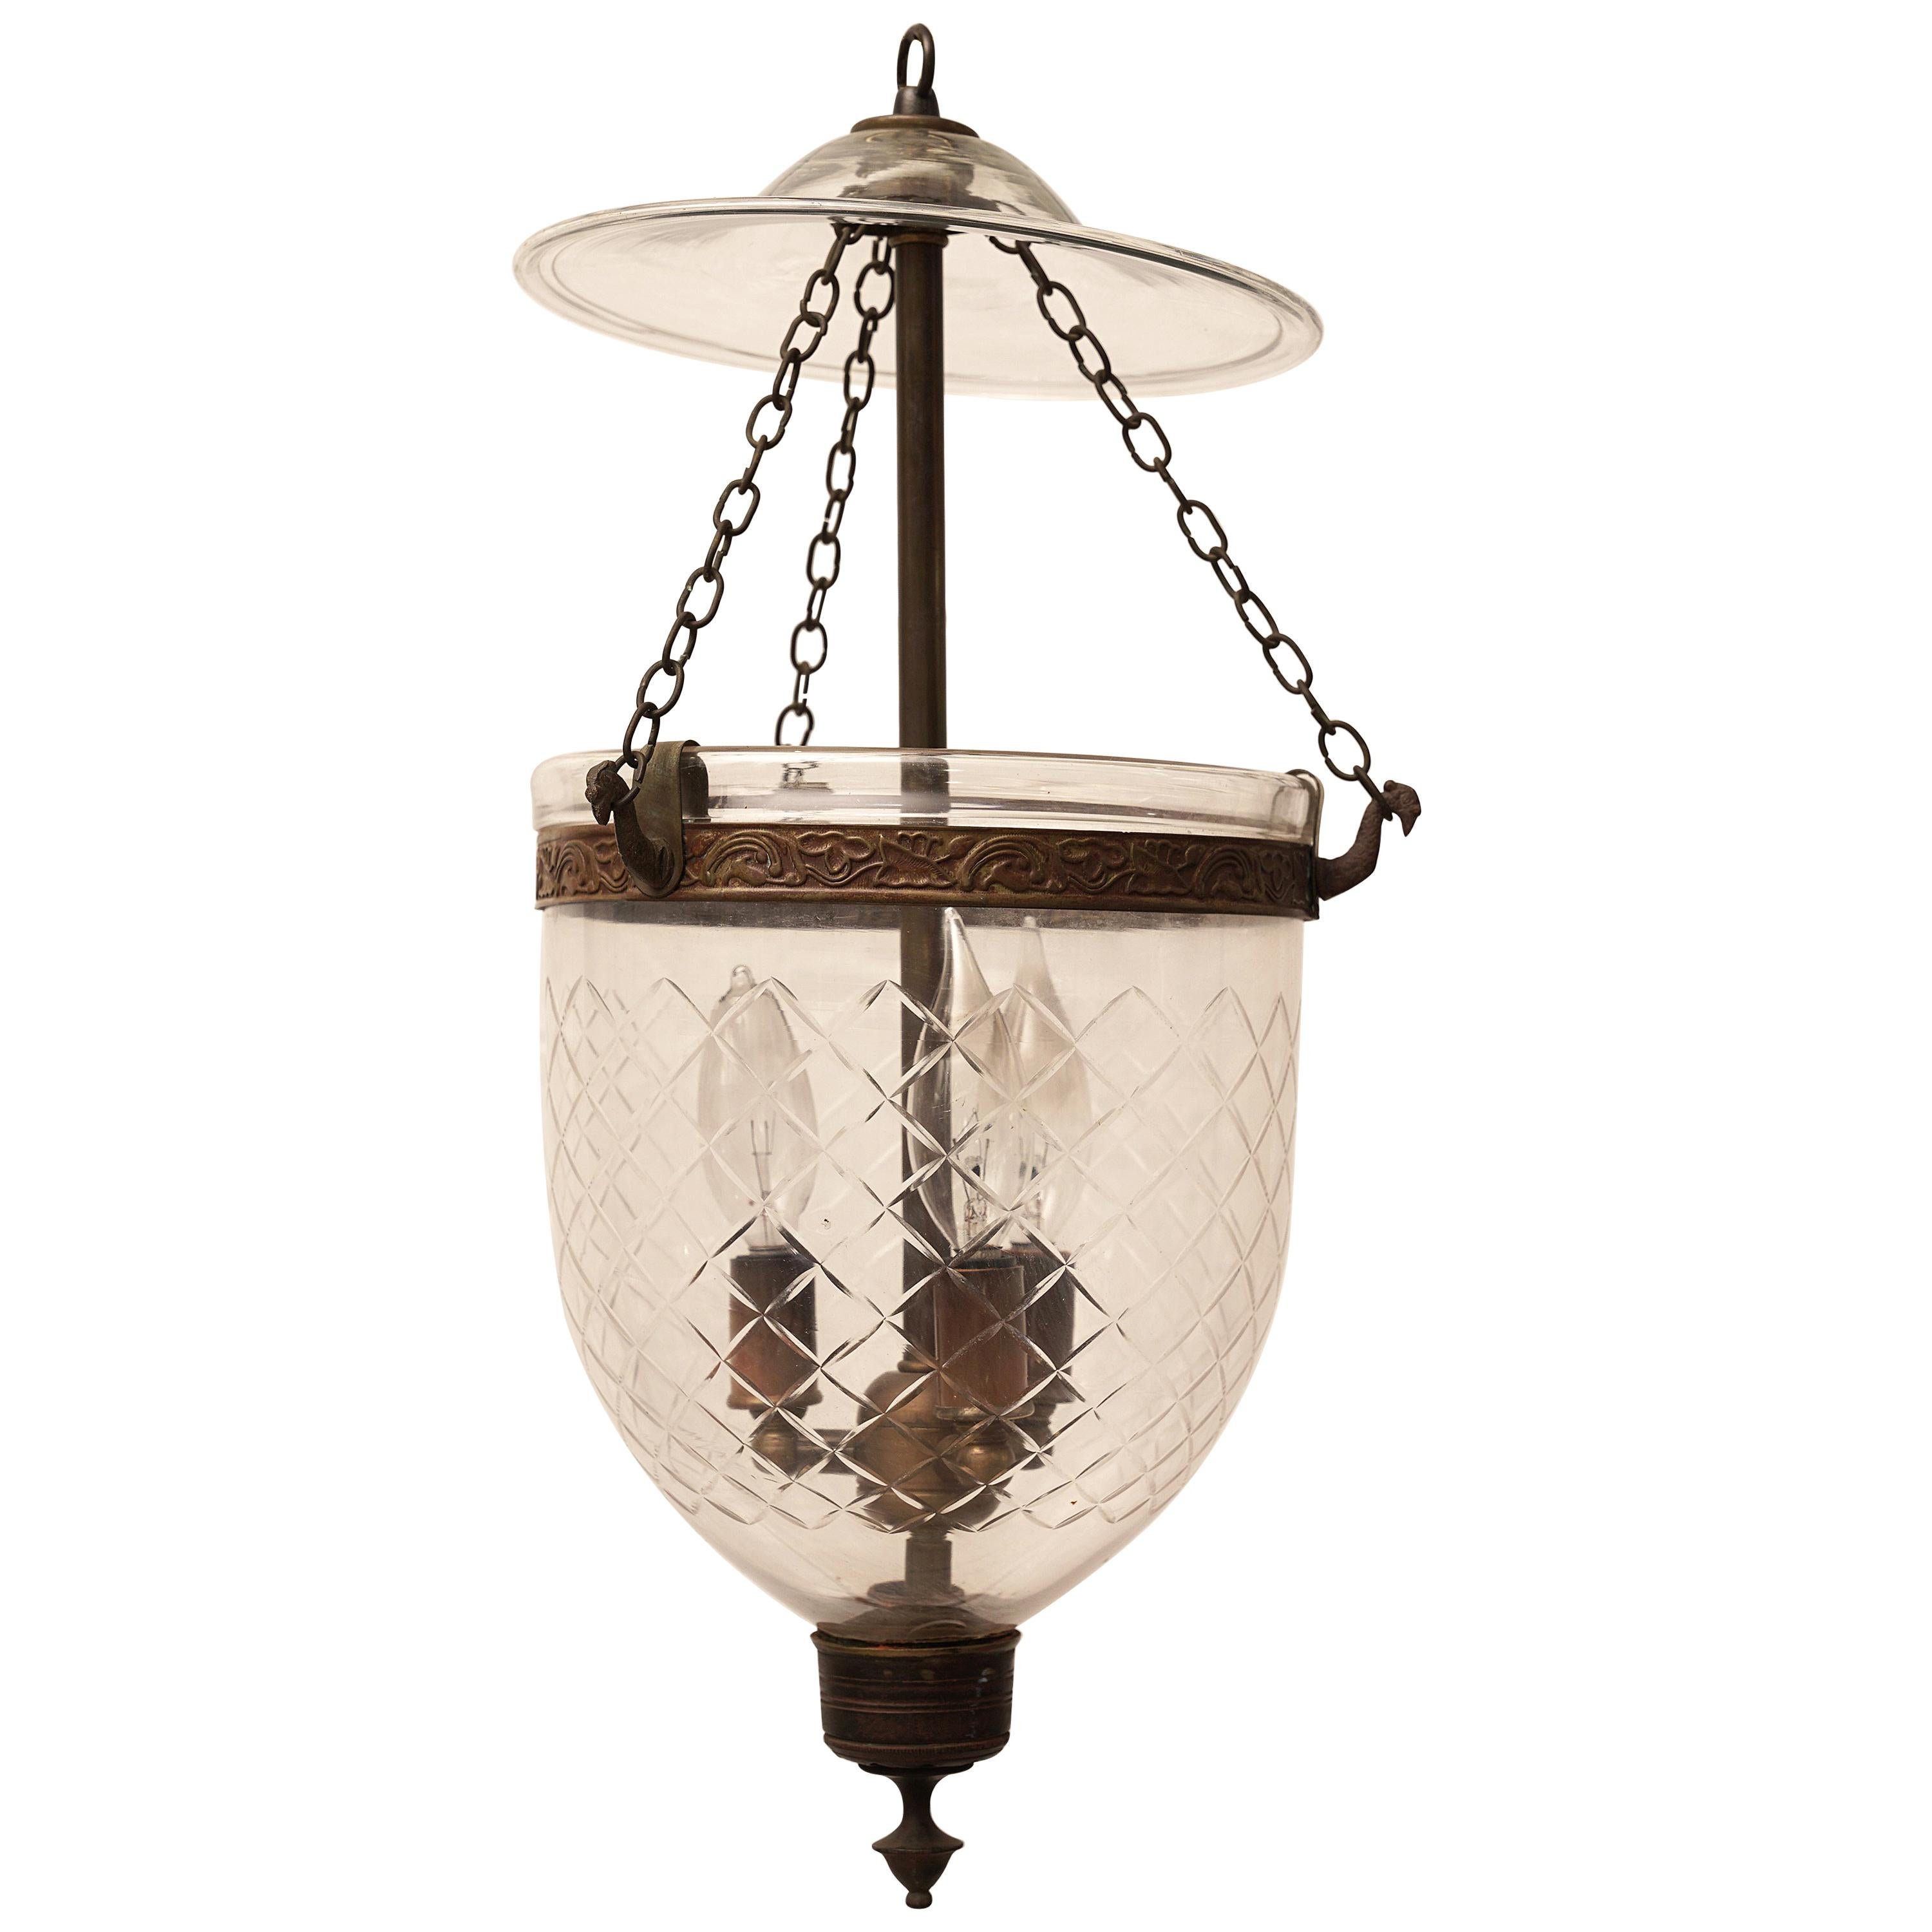 Late 19th Century English Bell Jar Hall Lantern